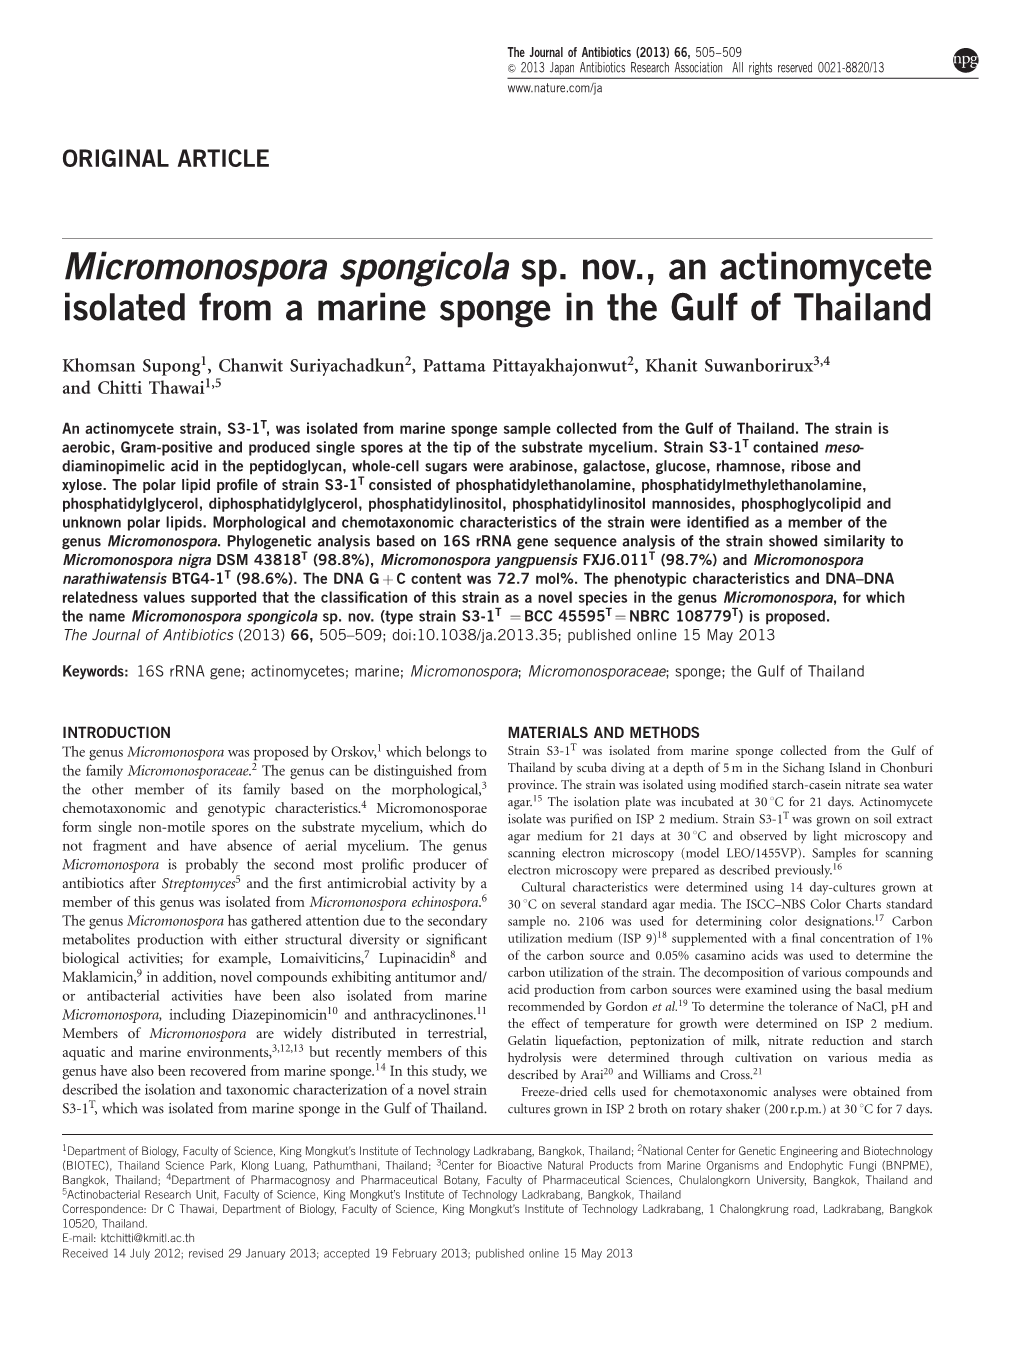 Micromonospora Spongicola Sp. Nov., an Actinomycete Isolated from a Marine Sponge in the Gulf of Thailand